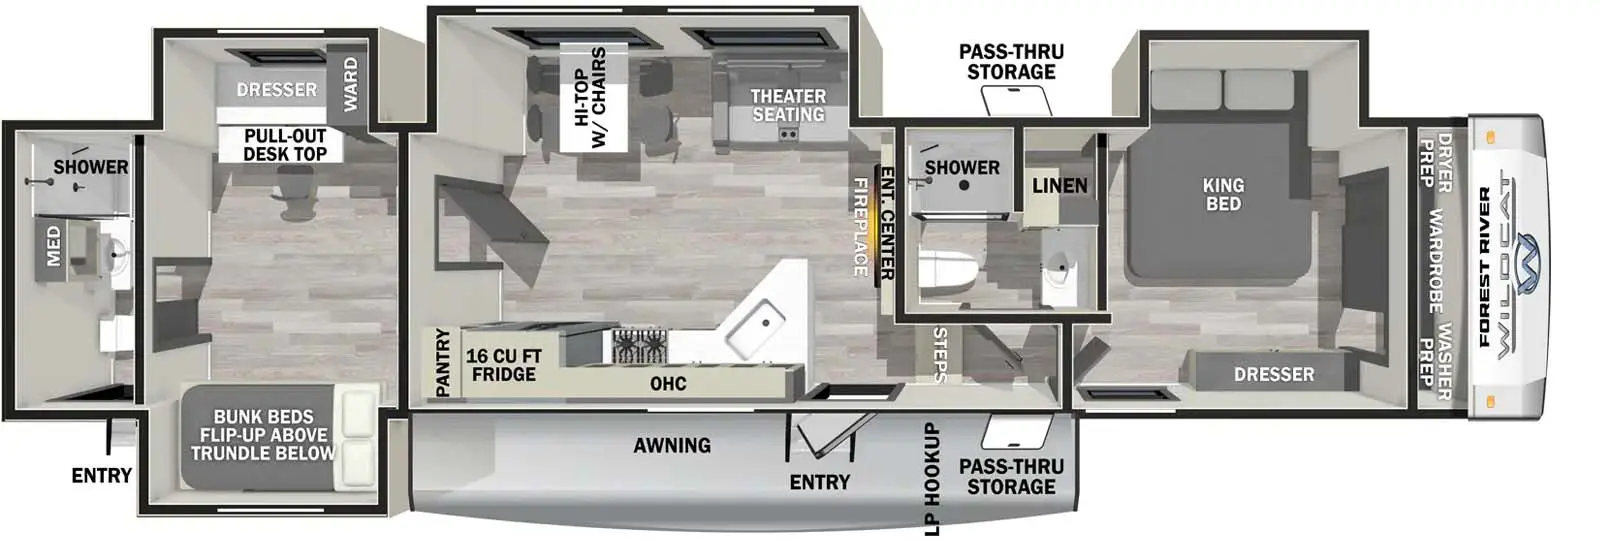 41DREAM Floorplan Image